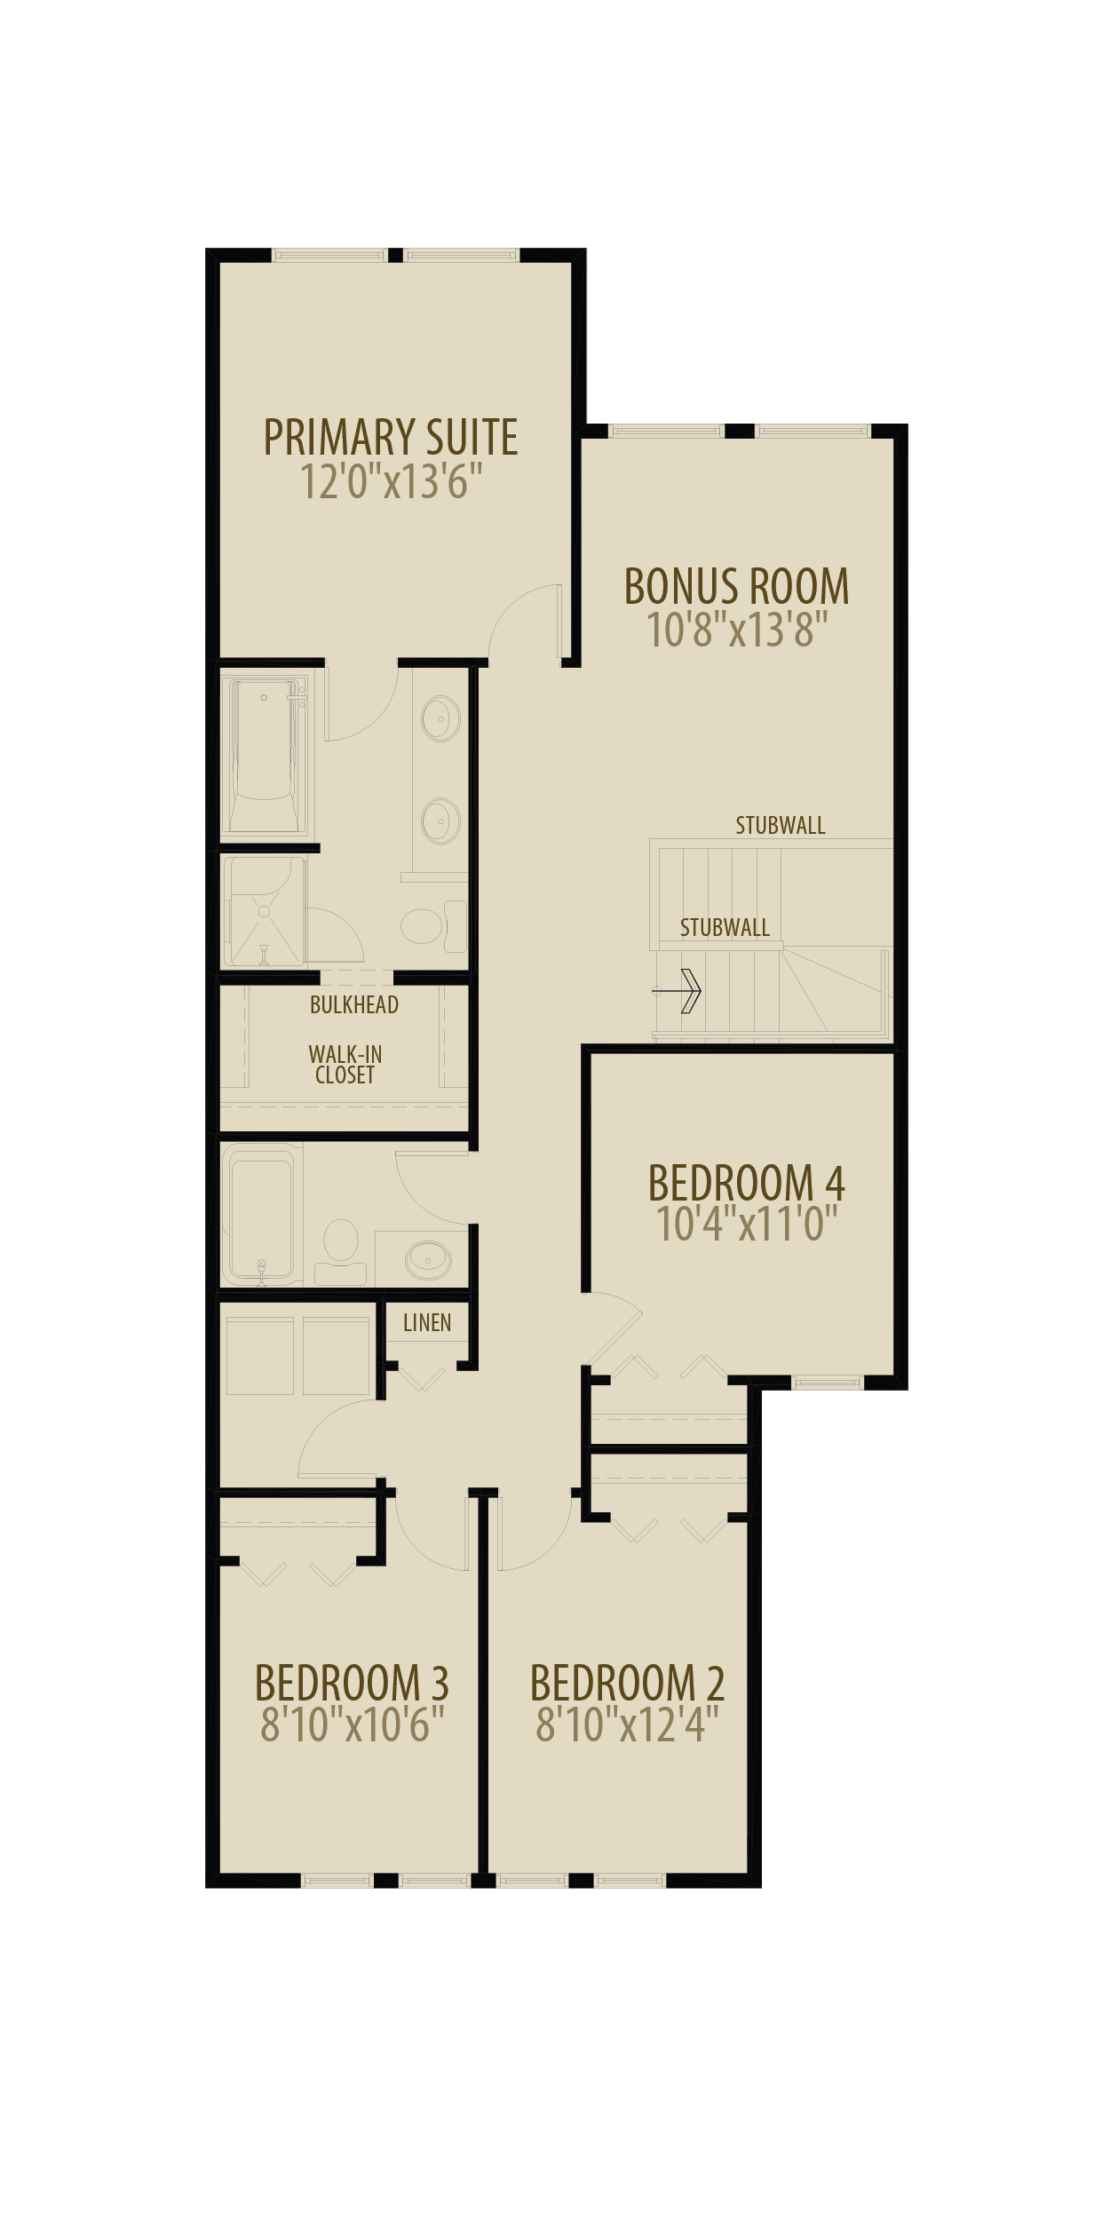 4th Bedroom Bonus Room adds 86 sq ft